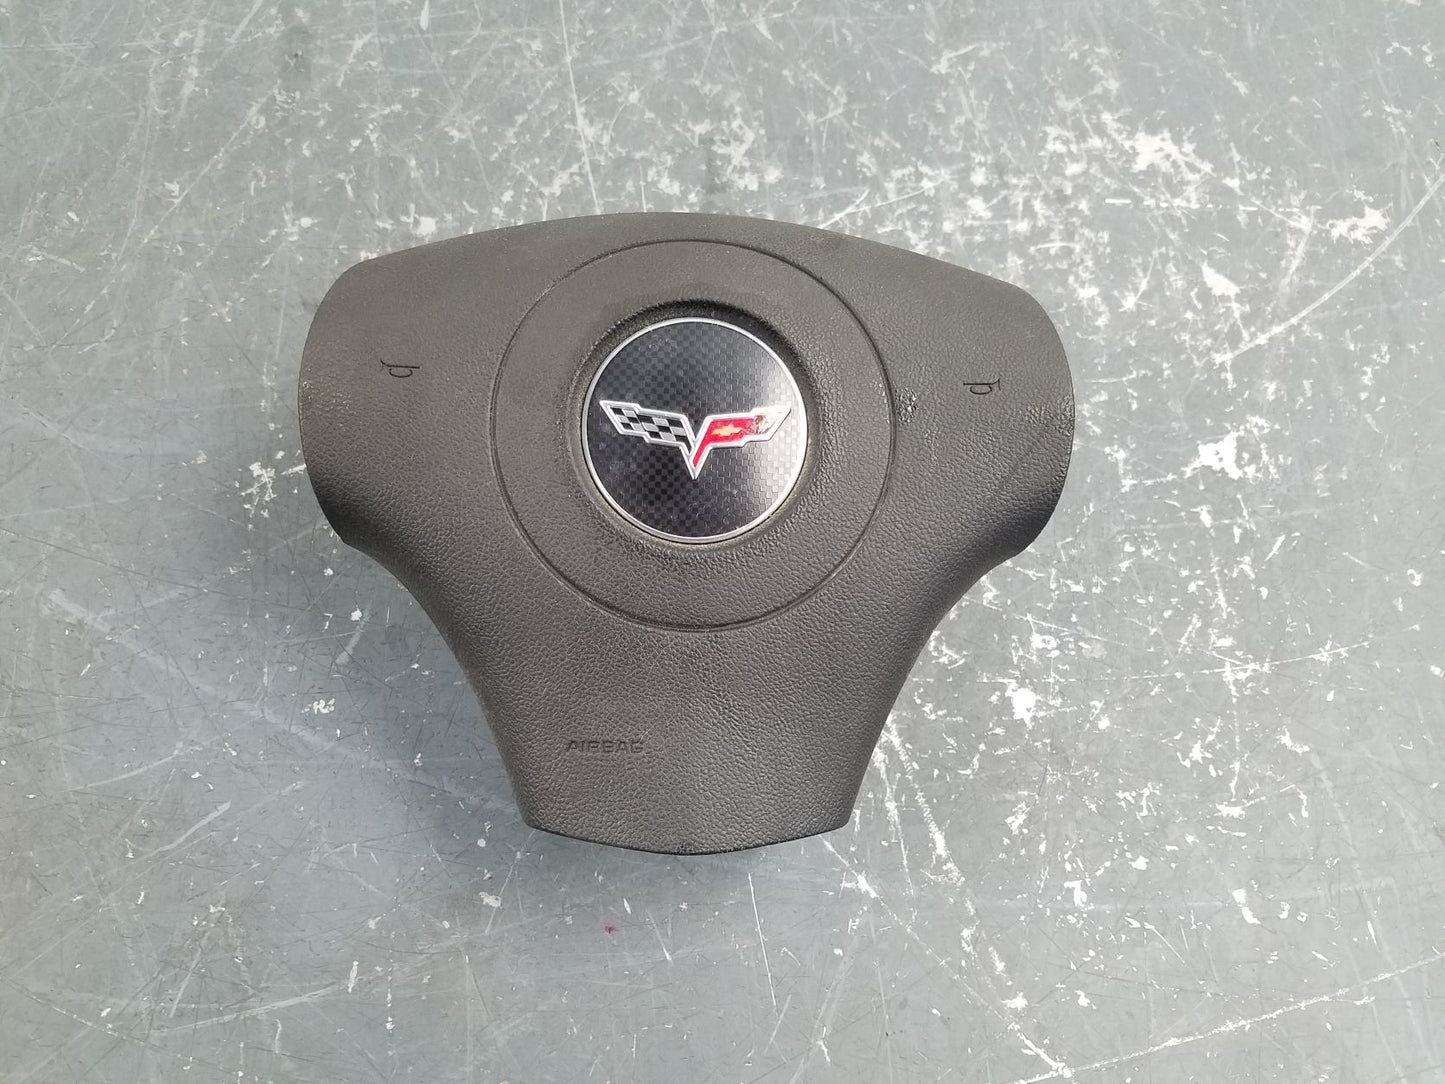 2011 Chevy Corvette C6 Grand Sport Steering Wheel Airbag #8373 C3